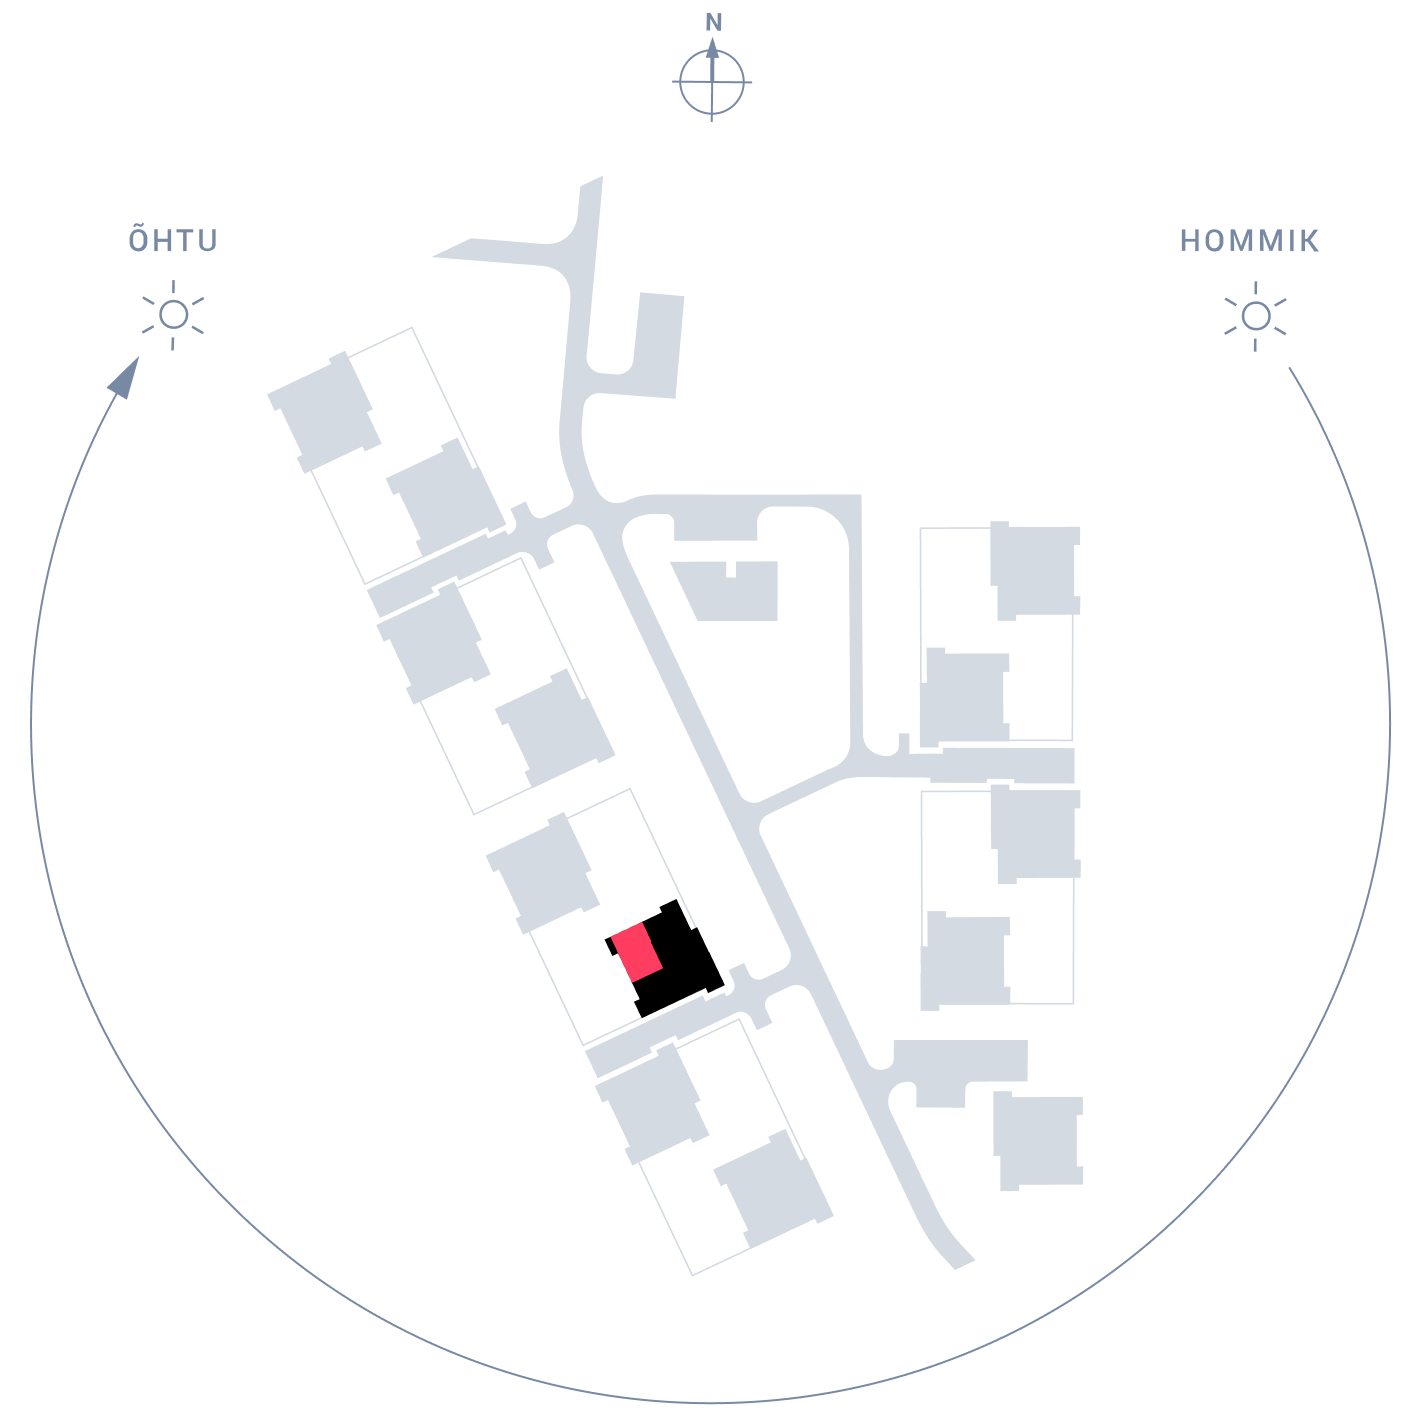 location plan